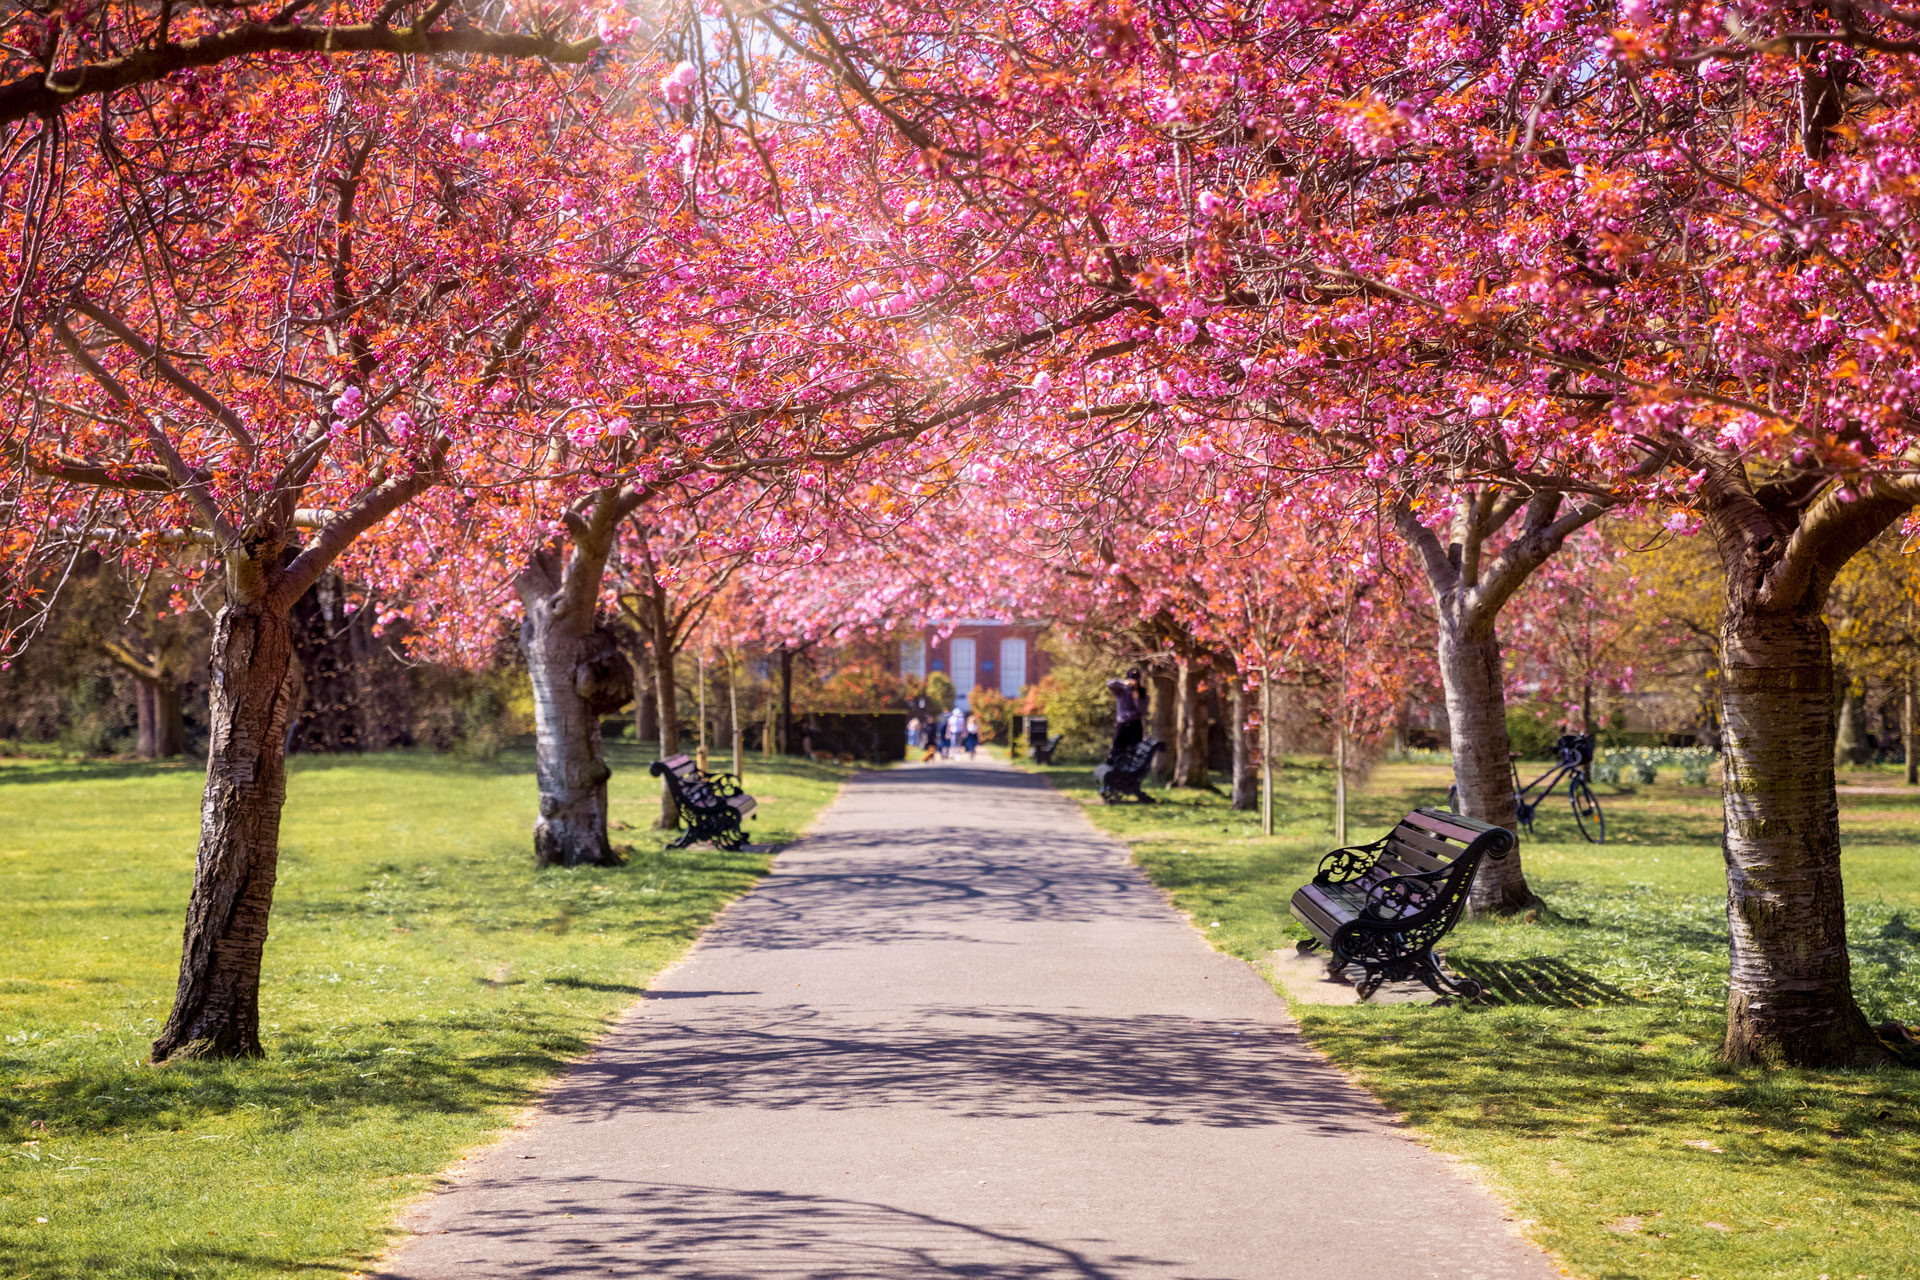 Best Parks For Spotting Cherry Blossom In London